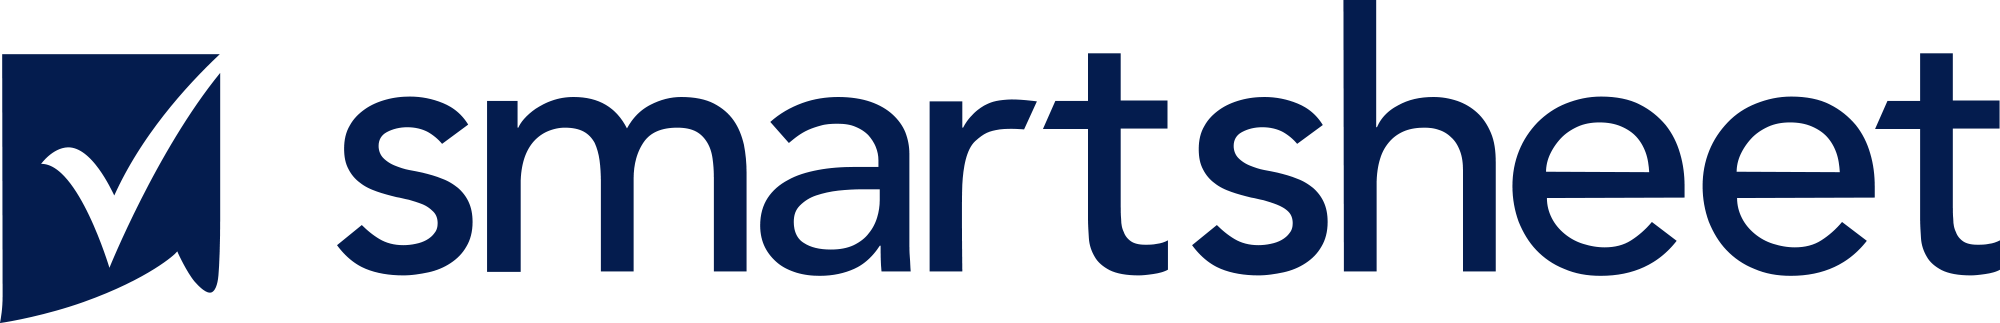 smartsheet-logo-horizontal-collaboration-blue